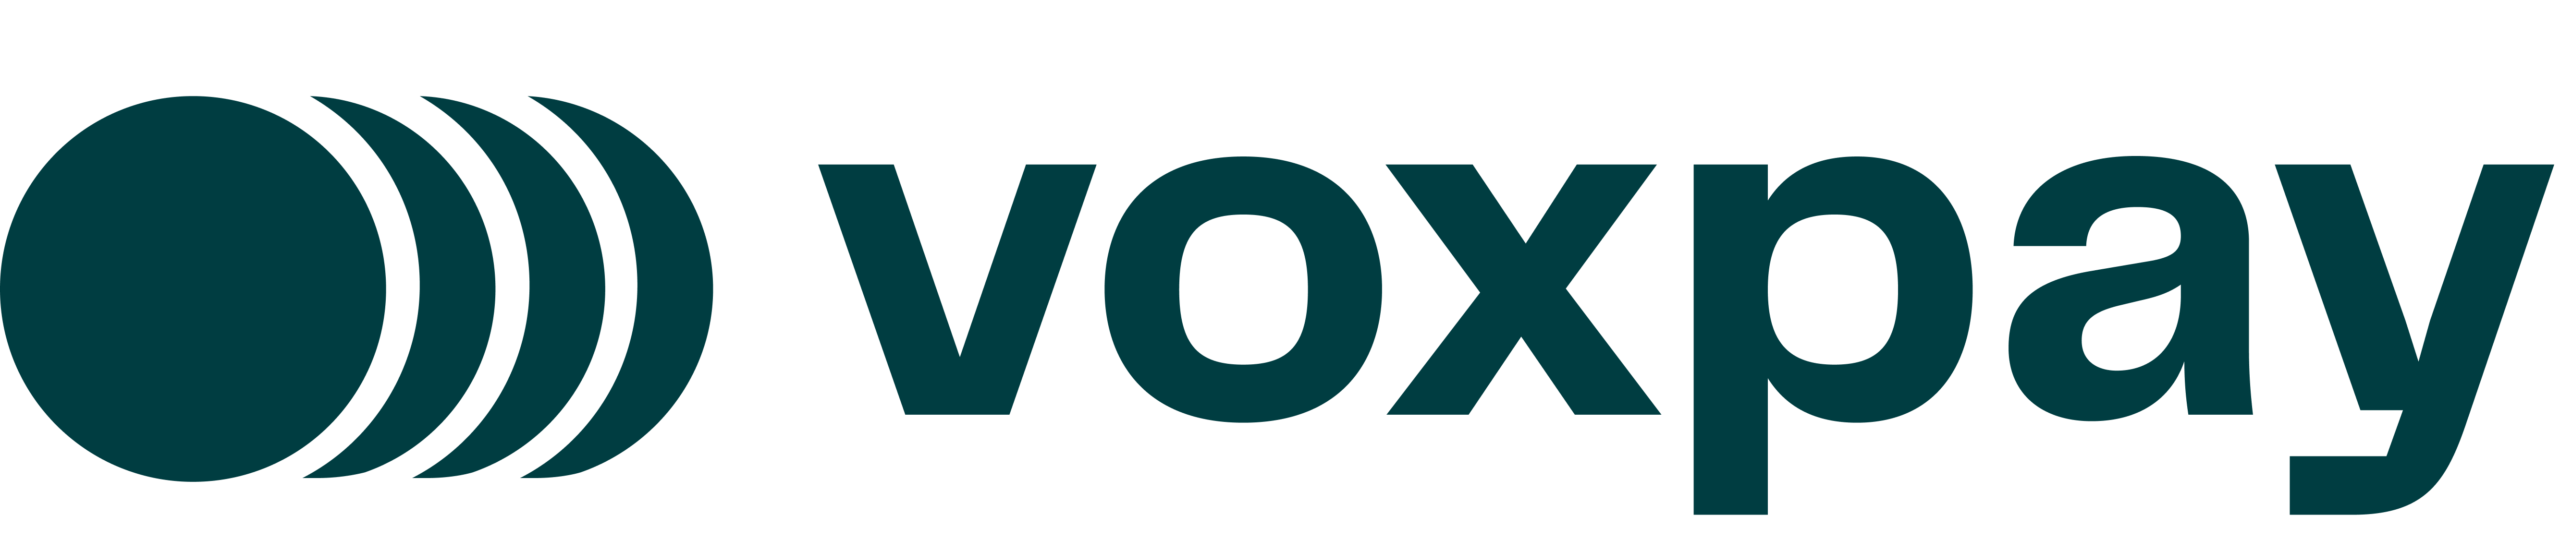 logo voxpay